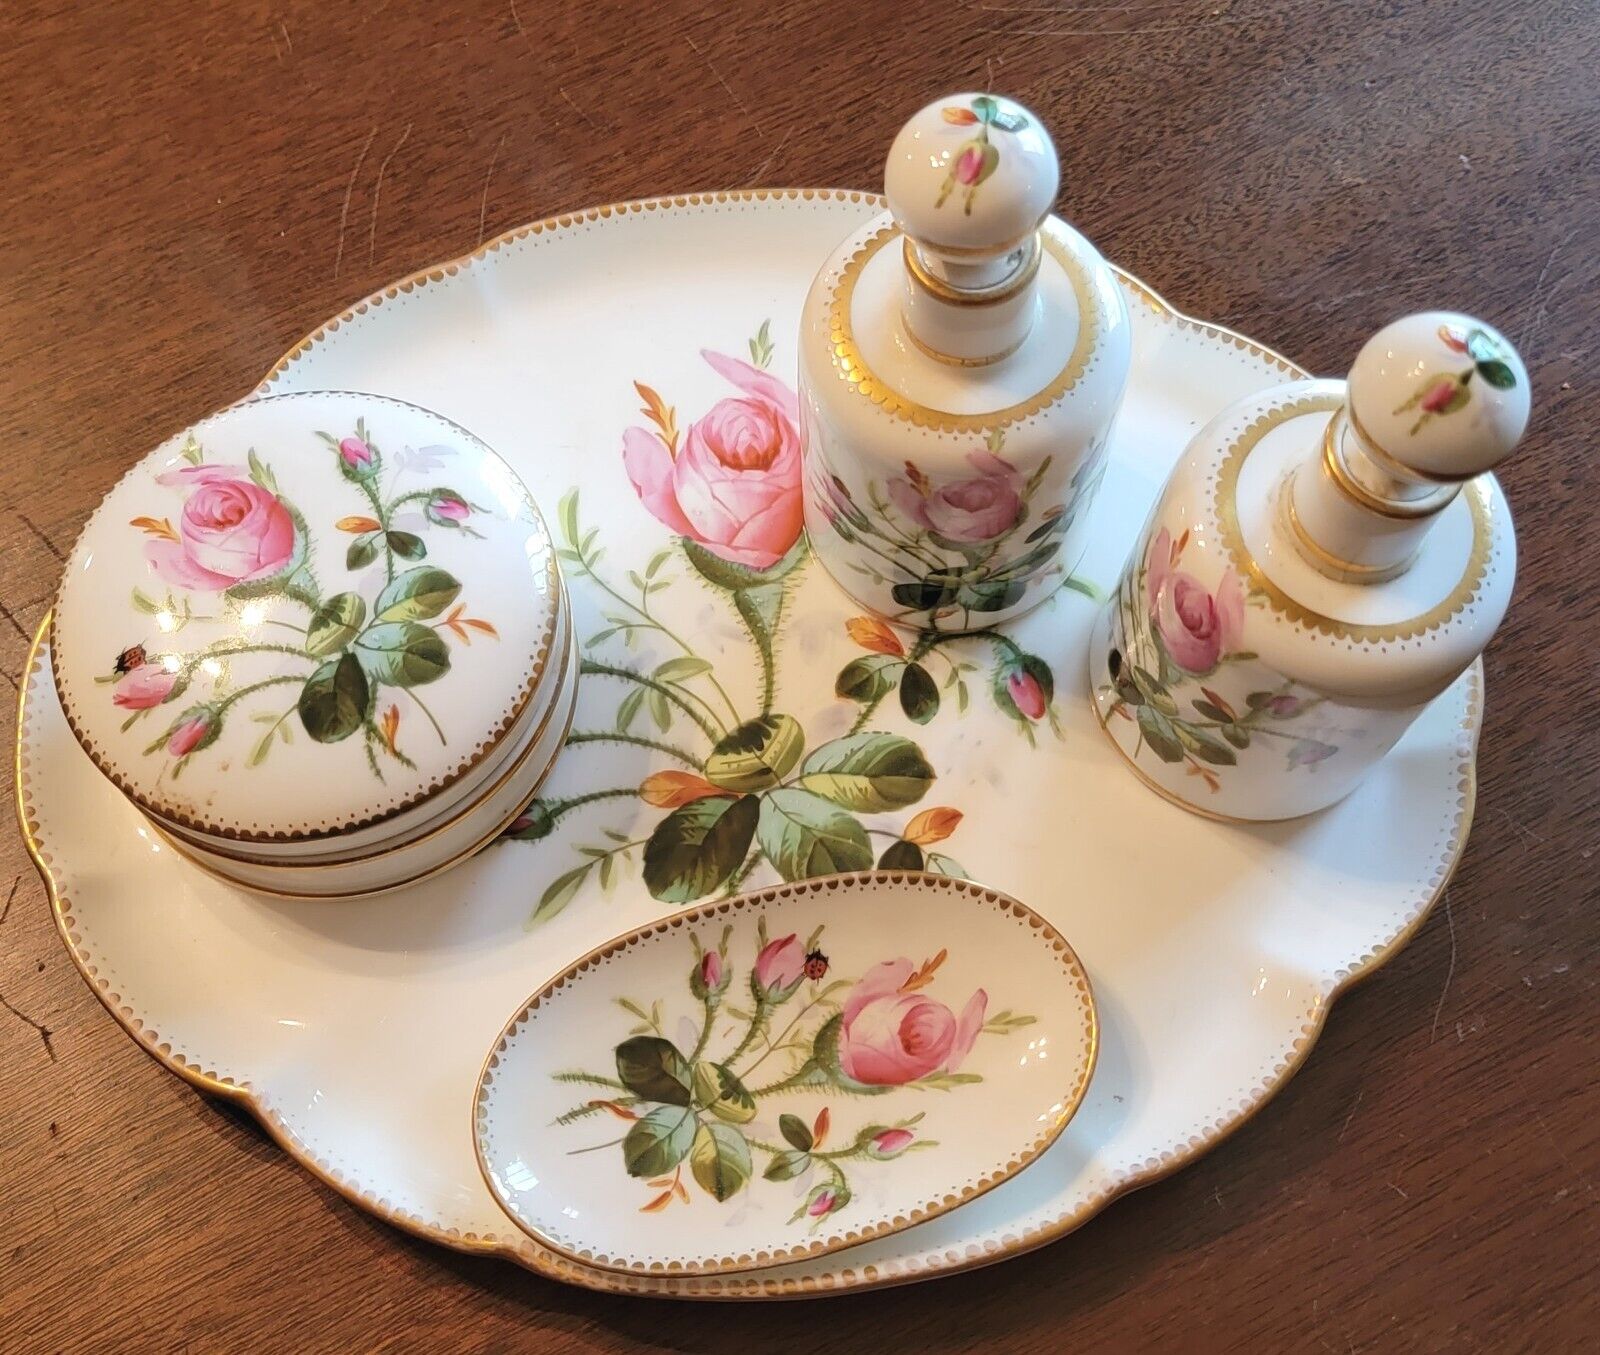 1870 RARE Antique Collingwood & Greatbatch Porcelain Dresser / Vanity Set Roses